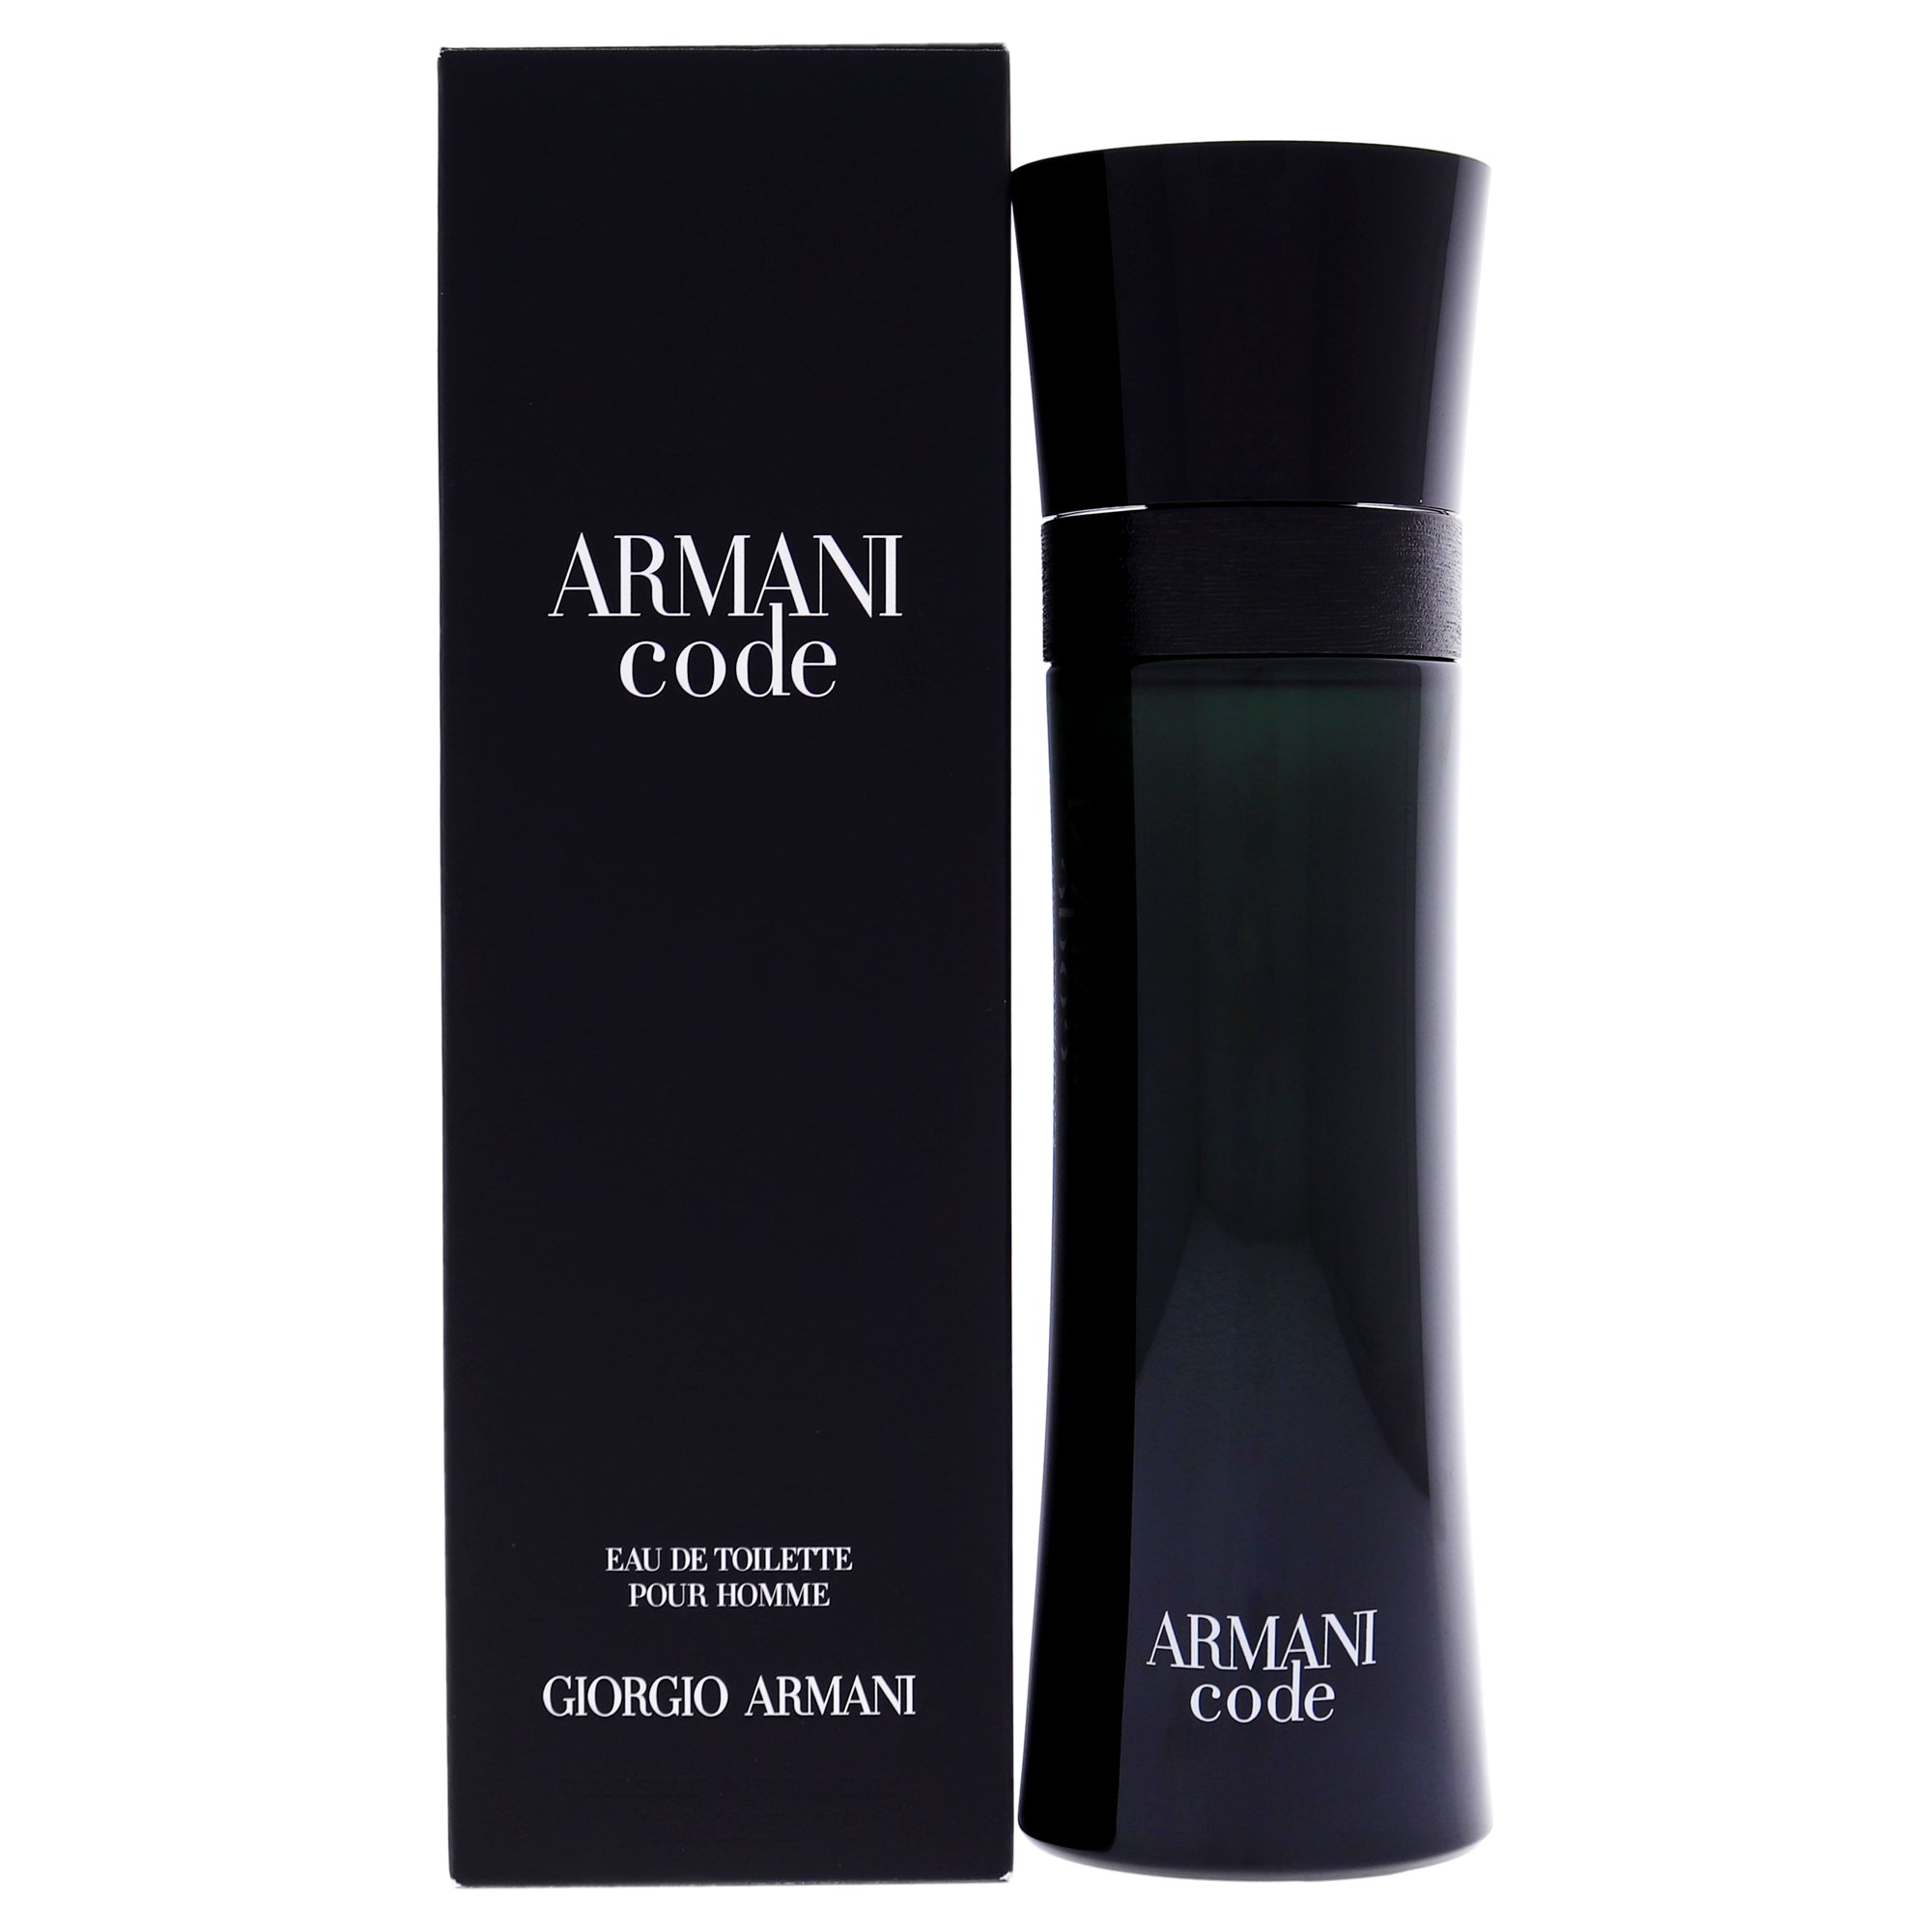 Armani Code by Giorgio Armani for Men 4.2 oz EDT Spray